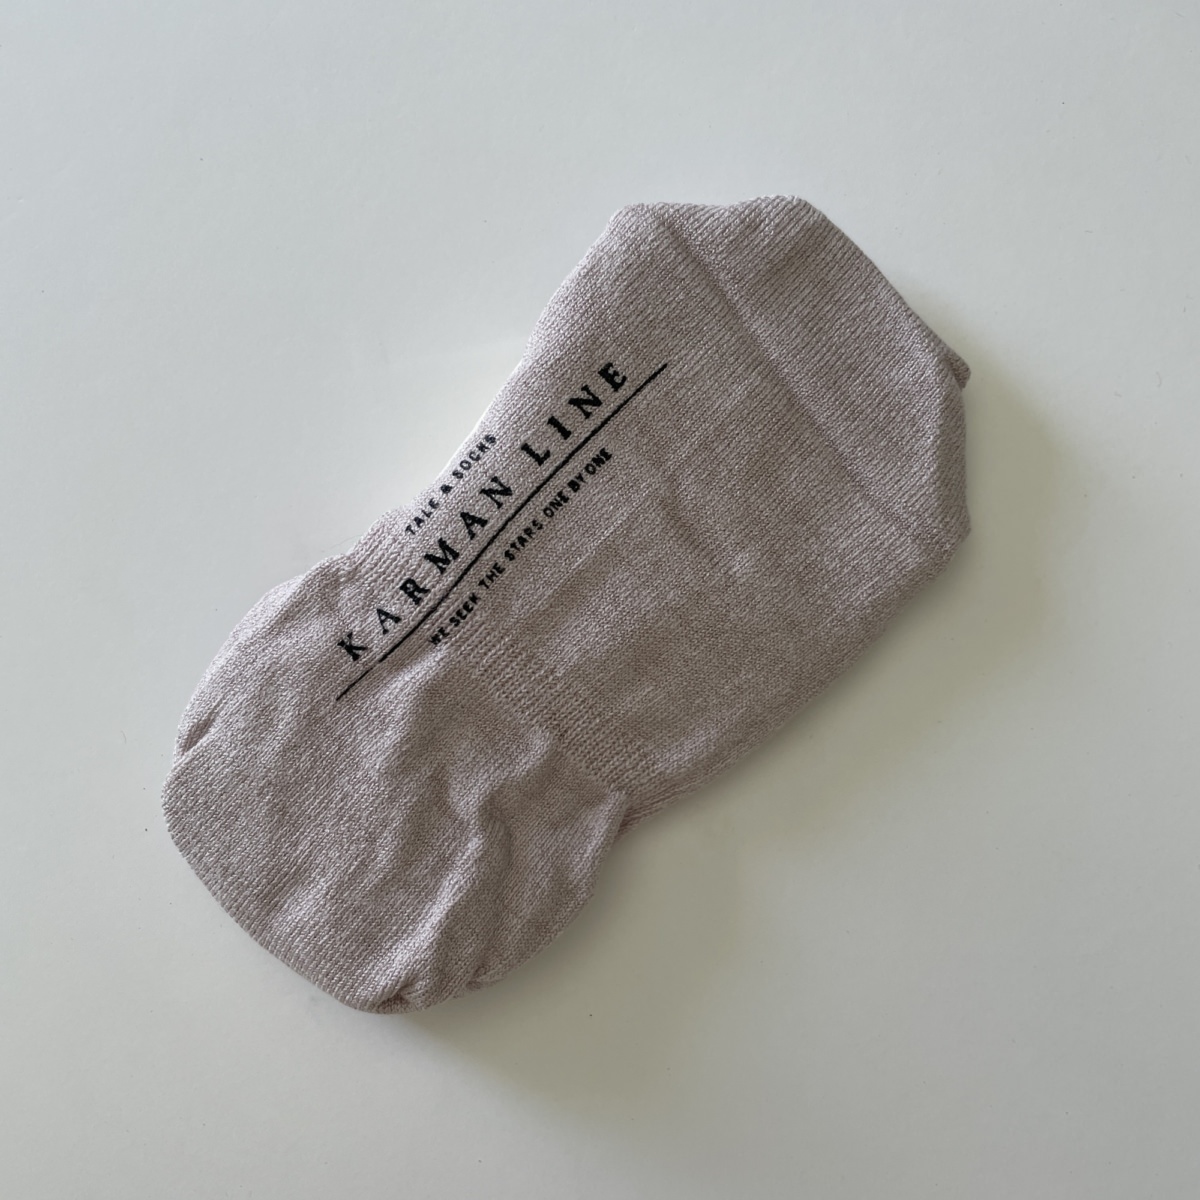 KARMAN LINE CARINA / Cover socks / Lilac